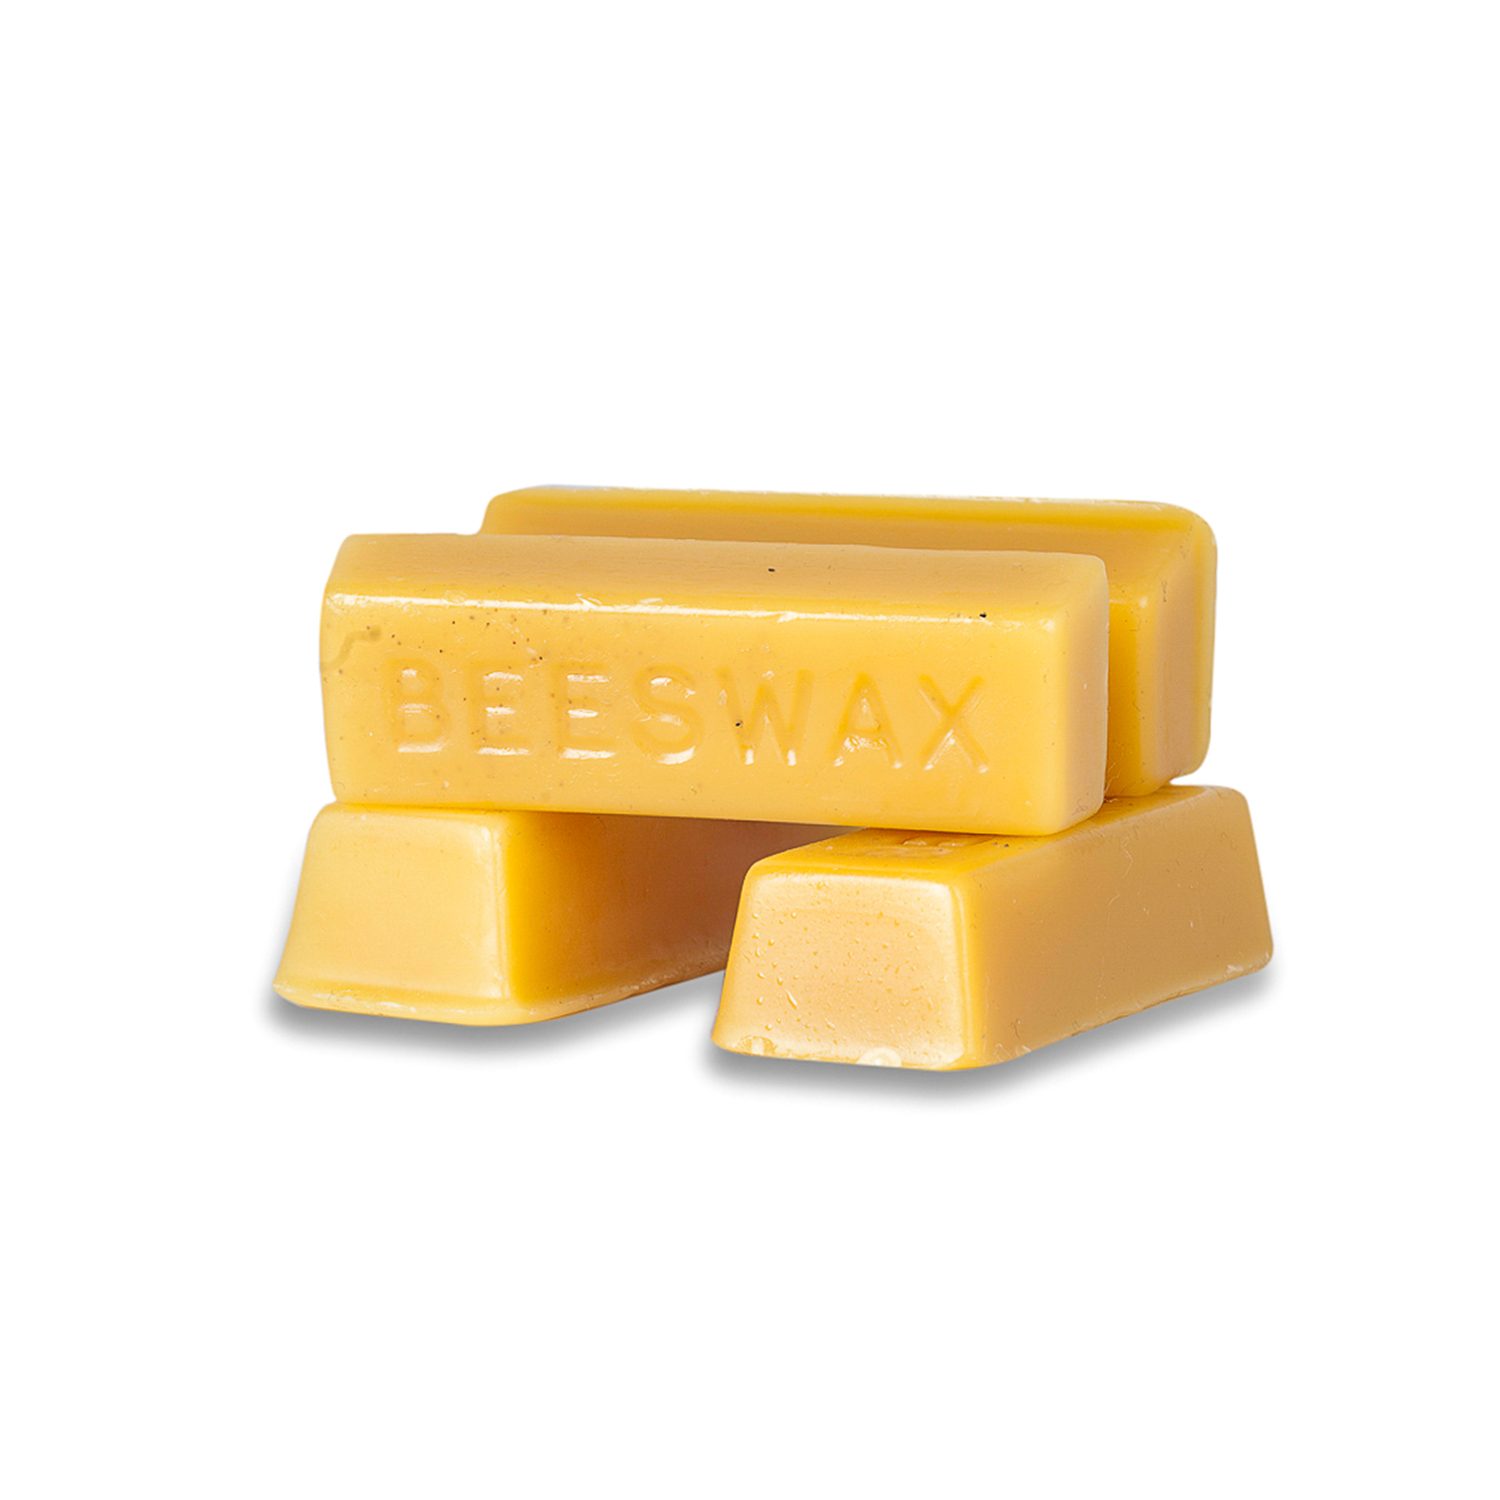 Beeswax Bars